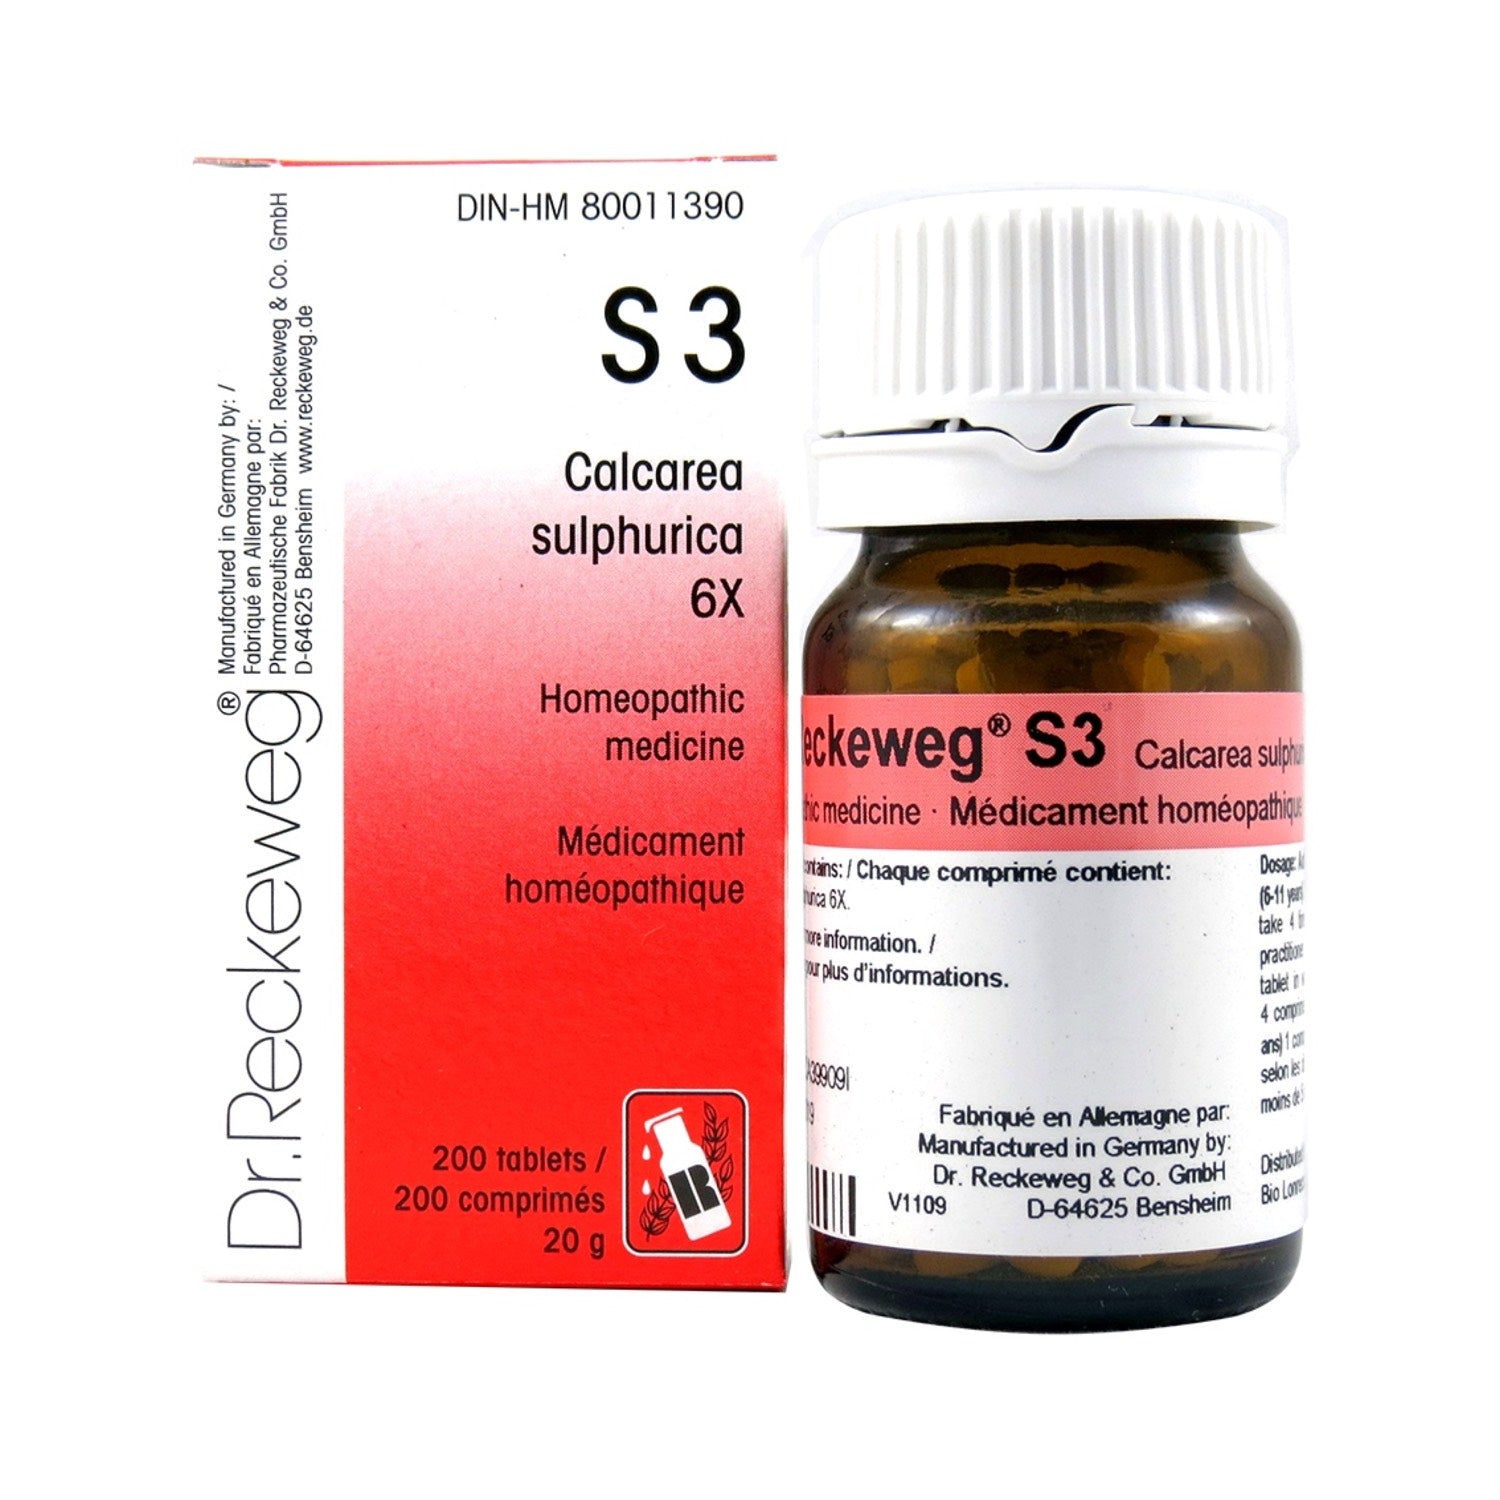 S3 Calcarea sulphurica Homeopathic medicine Schuessler salt  6X 200 tablets (20 g) - iwellnessbox